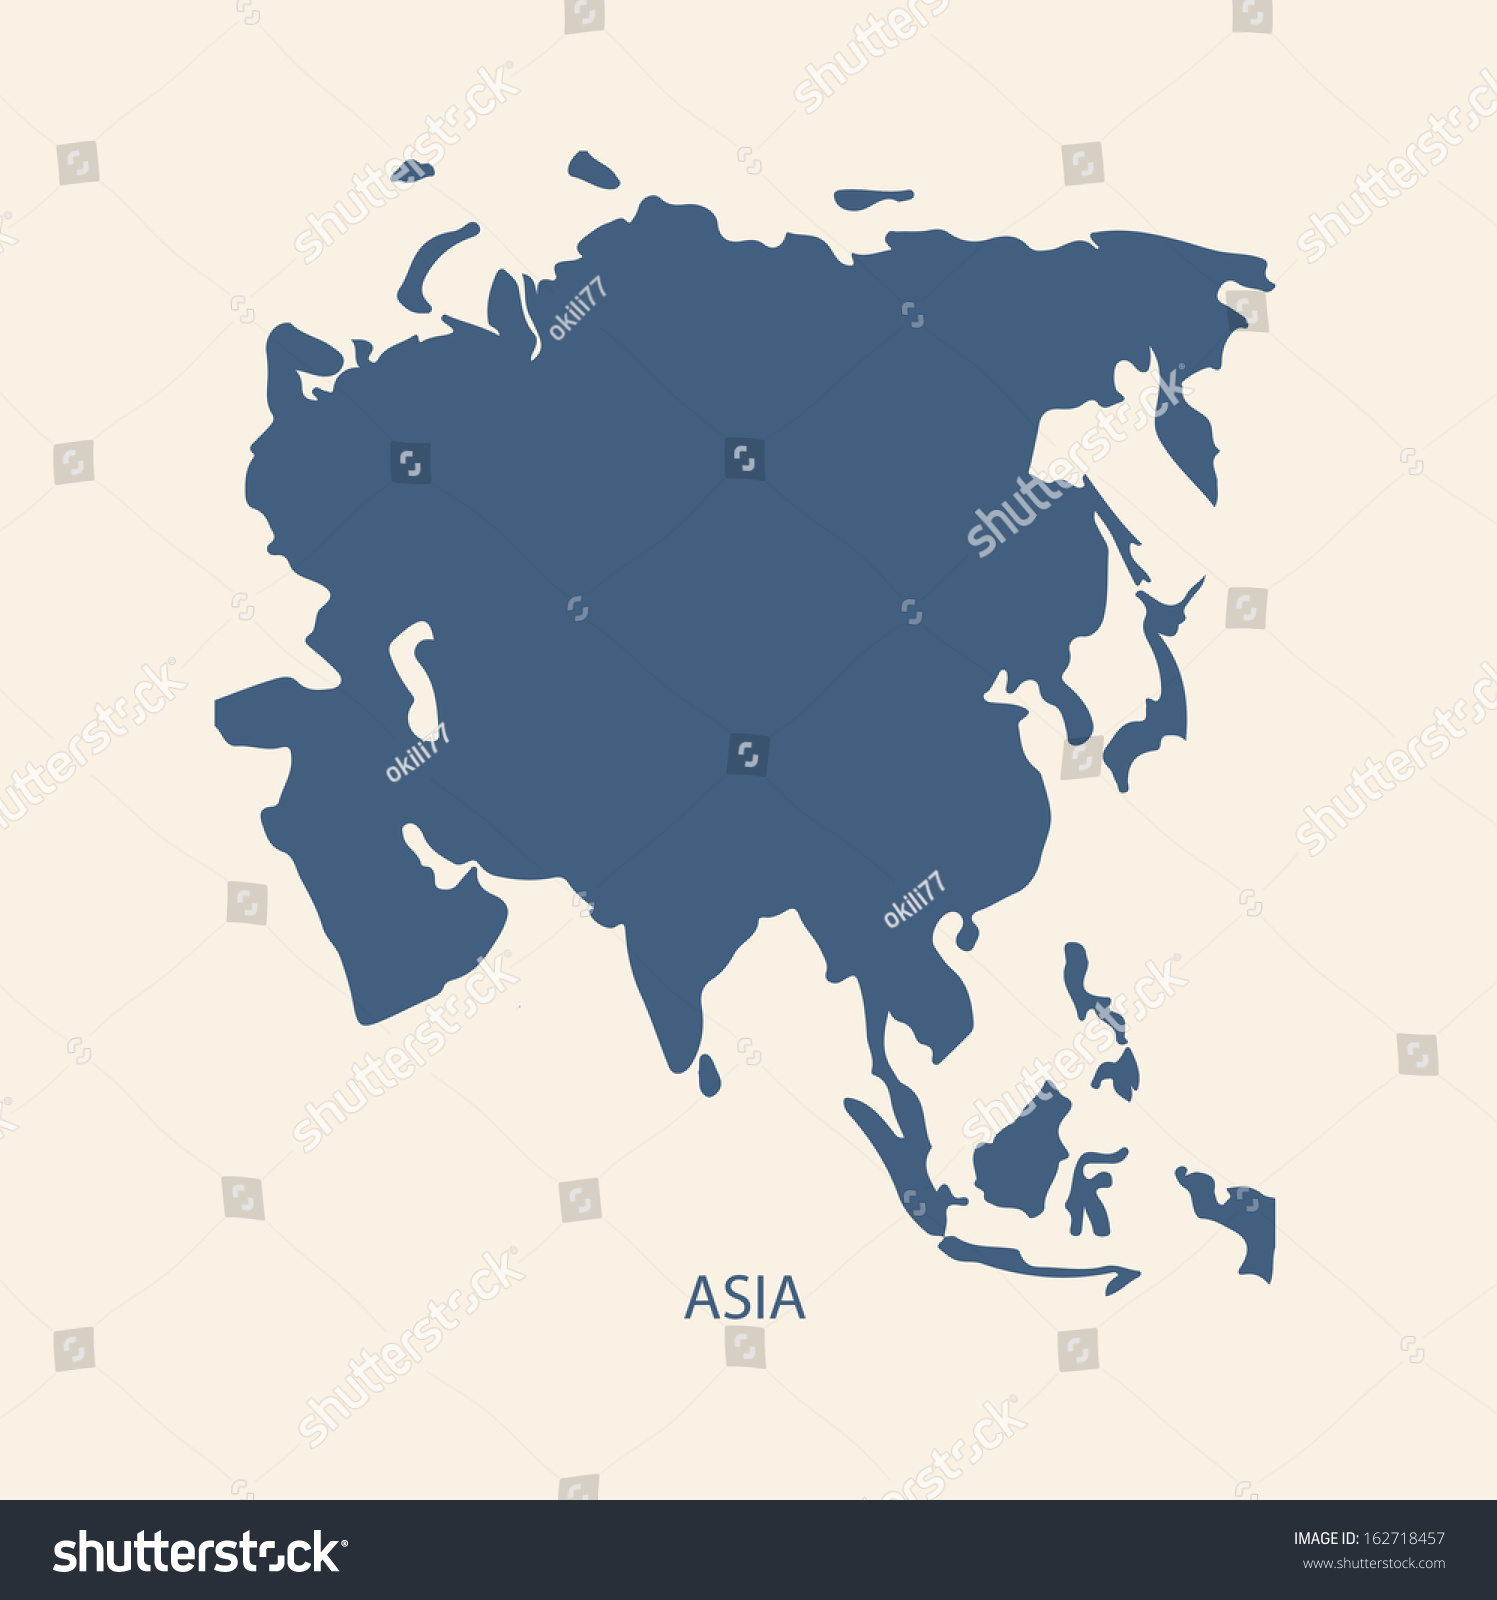 Asia Map Vector - 162718457 : Shutterstock